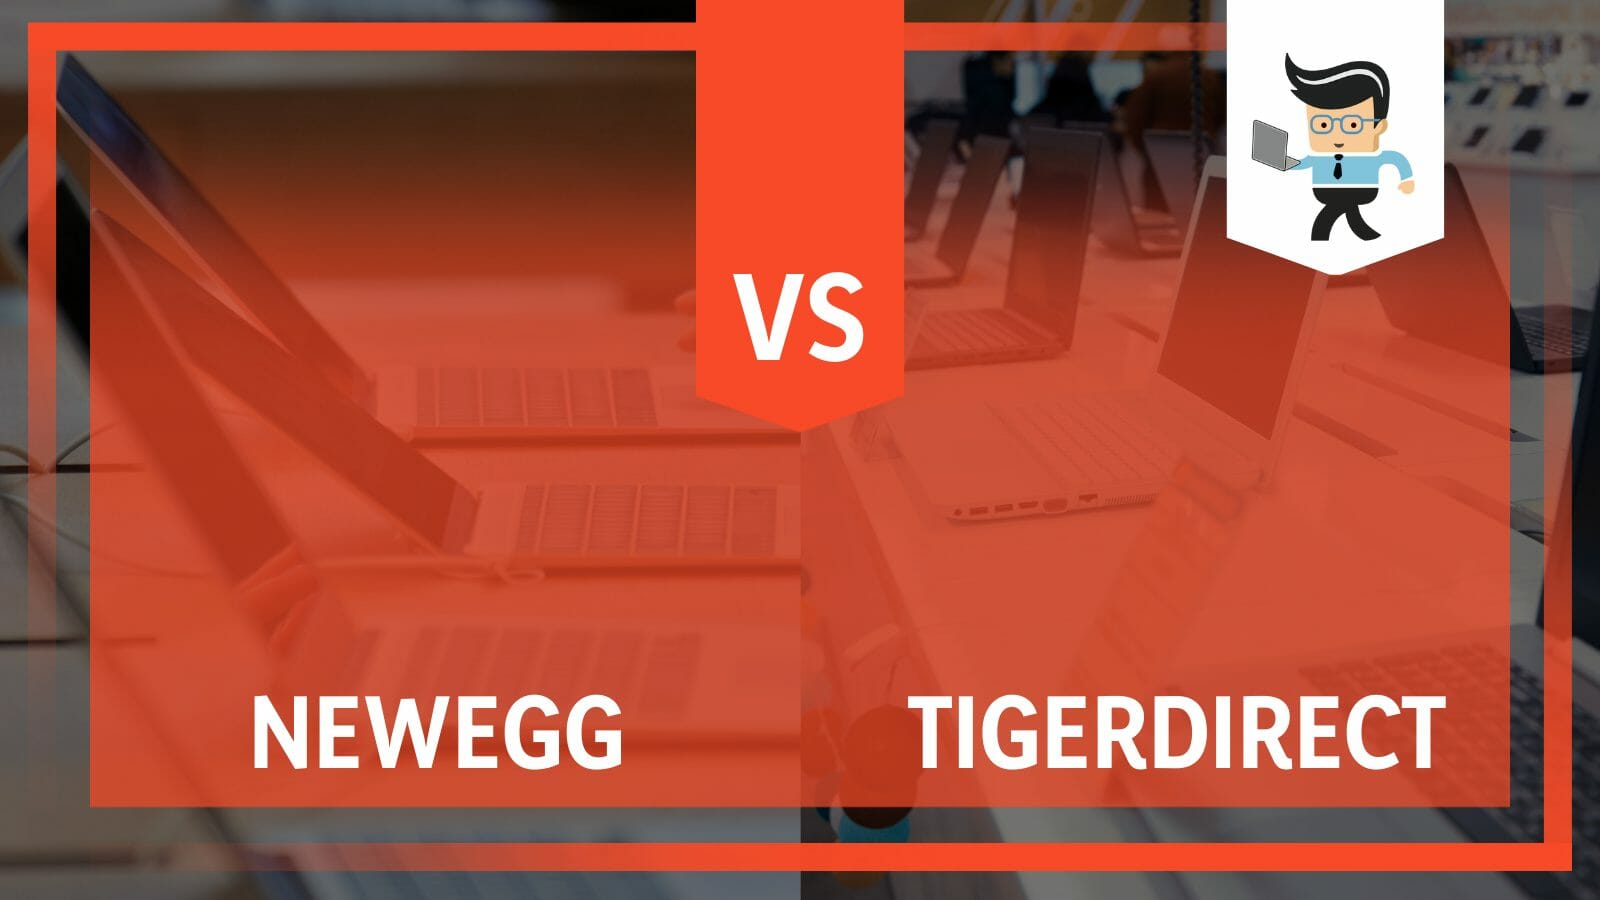 Difference Between Newegg vs Tigerdirect